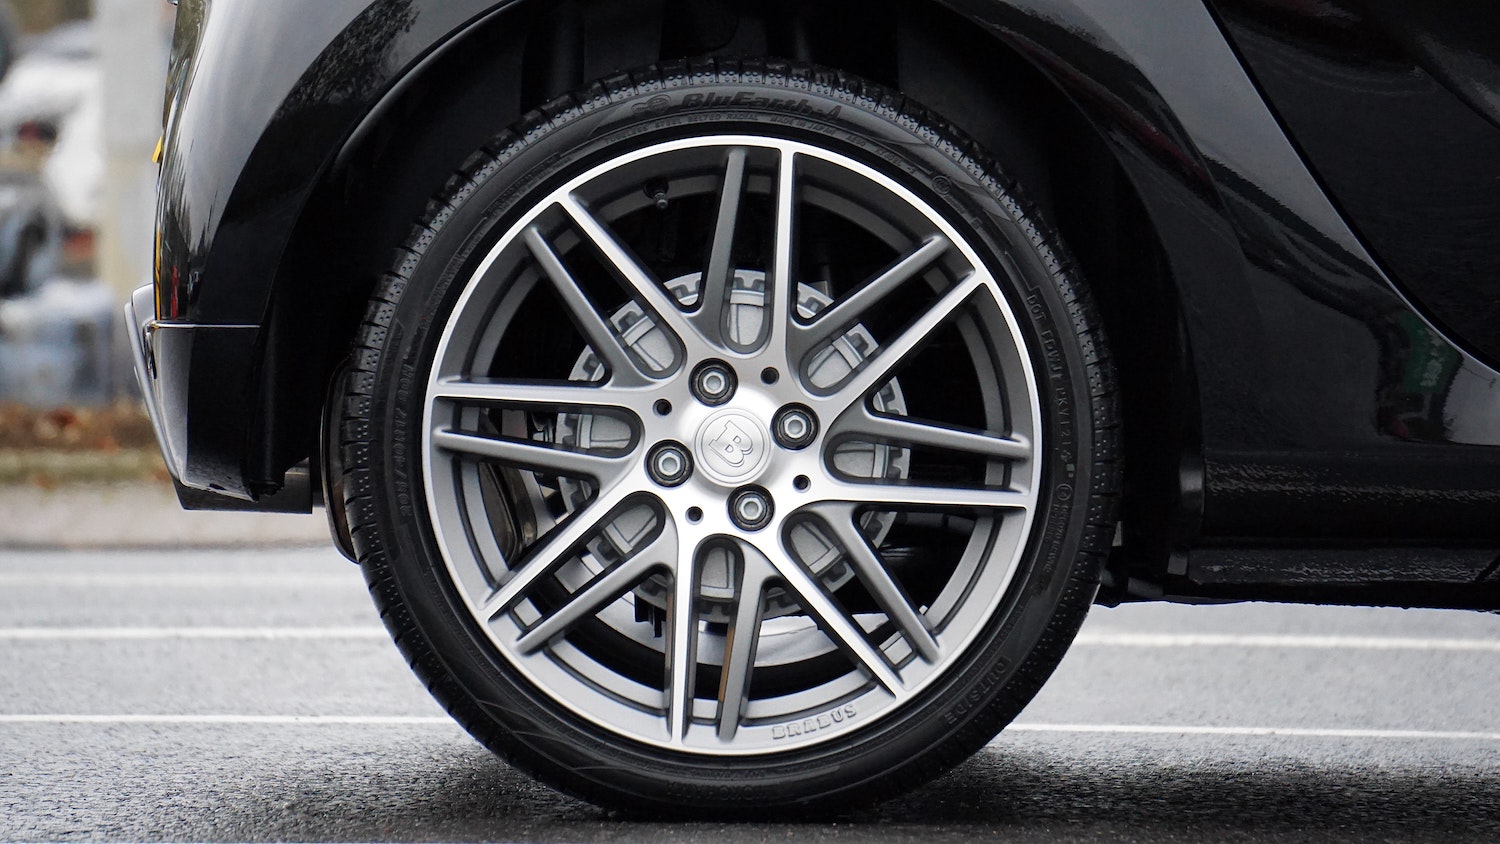 Opinion on black magic Tire wet Gel : r/AutoDetailing